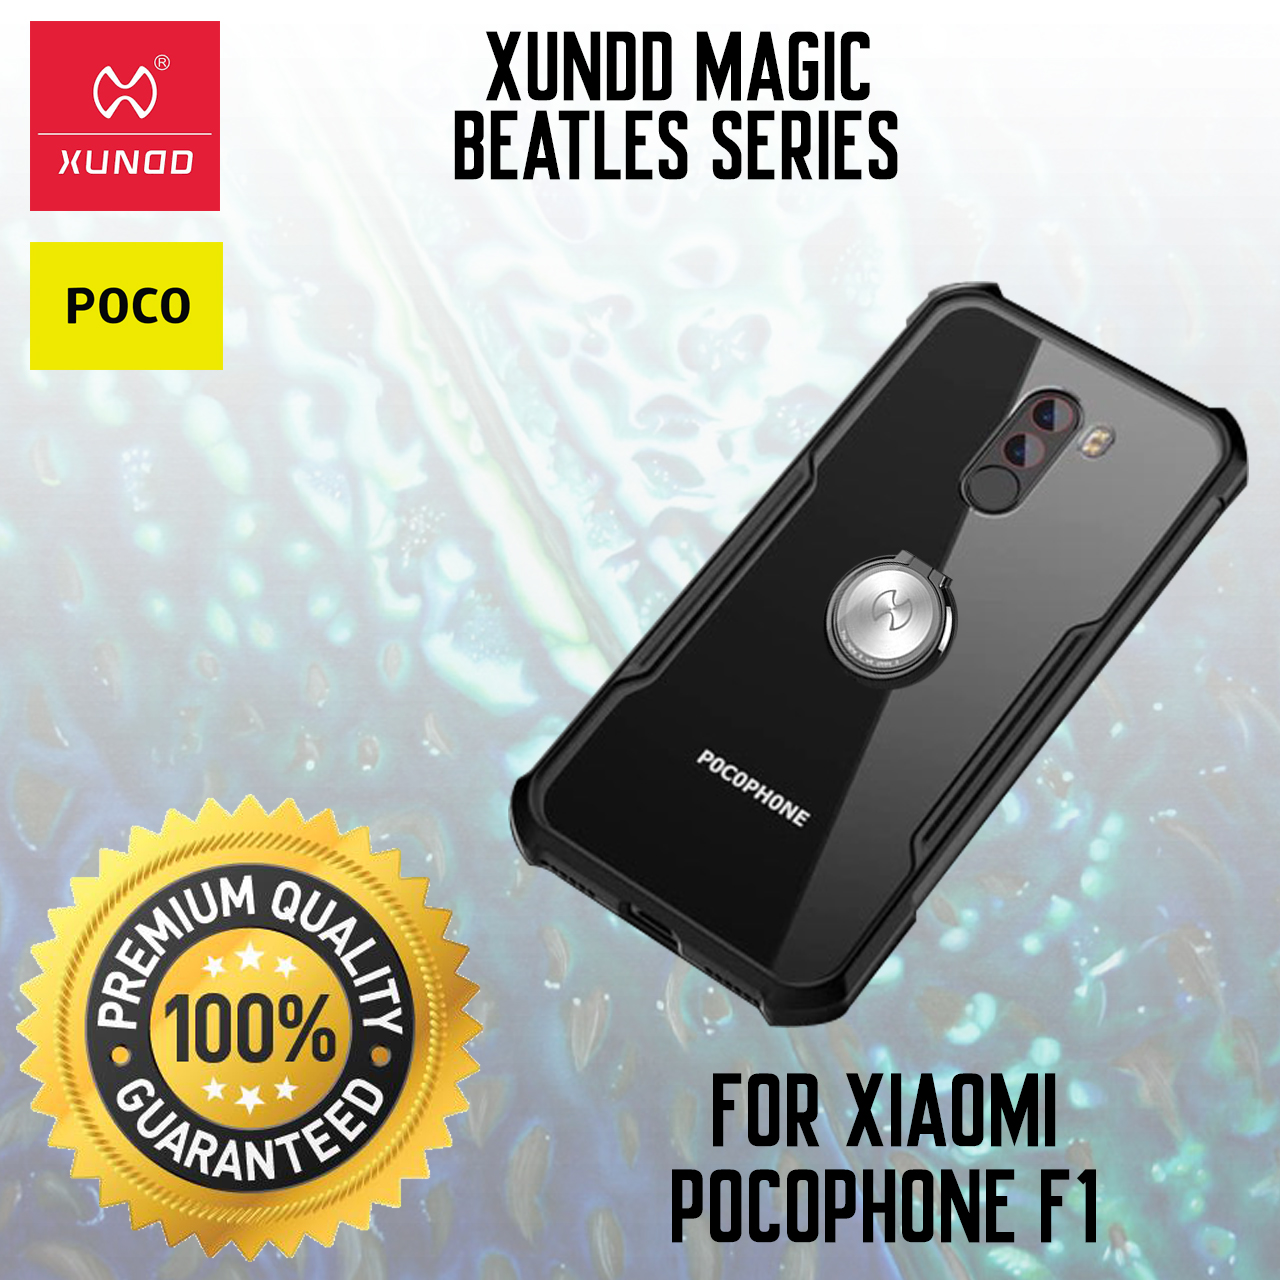 Pocophone F1 Xundd Magic Beatle Series Case Lazada Ph 8606